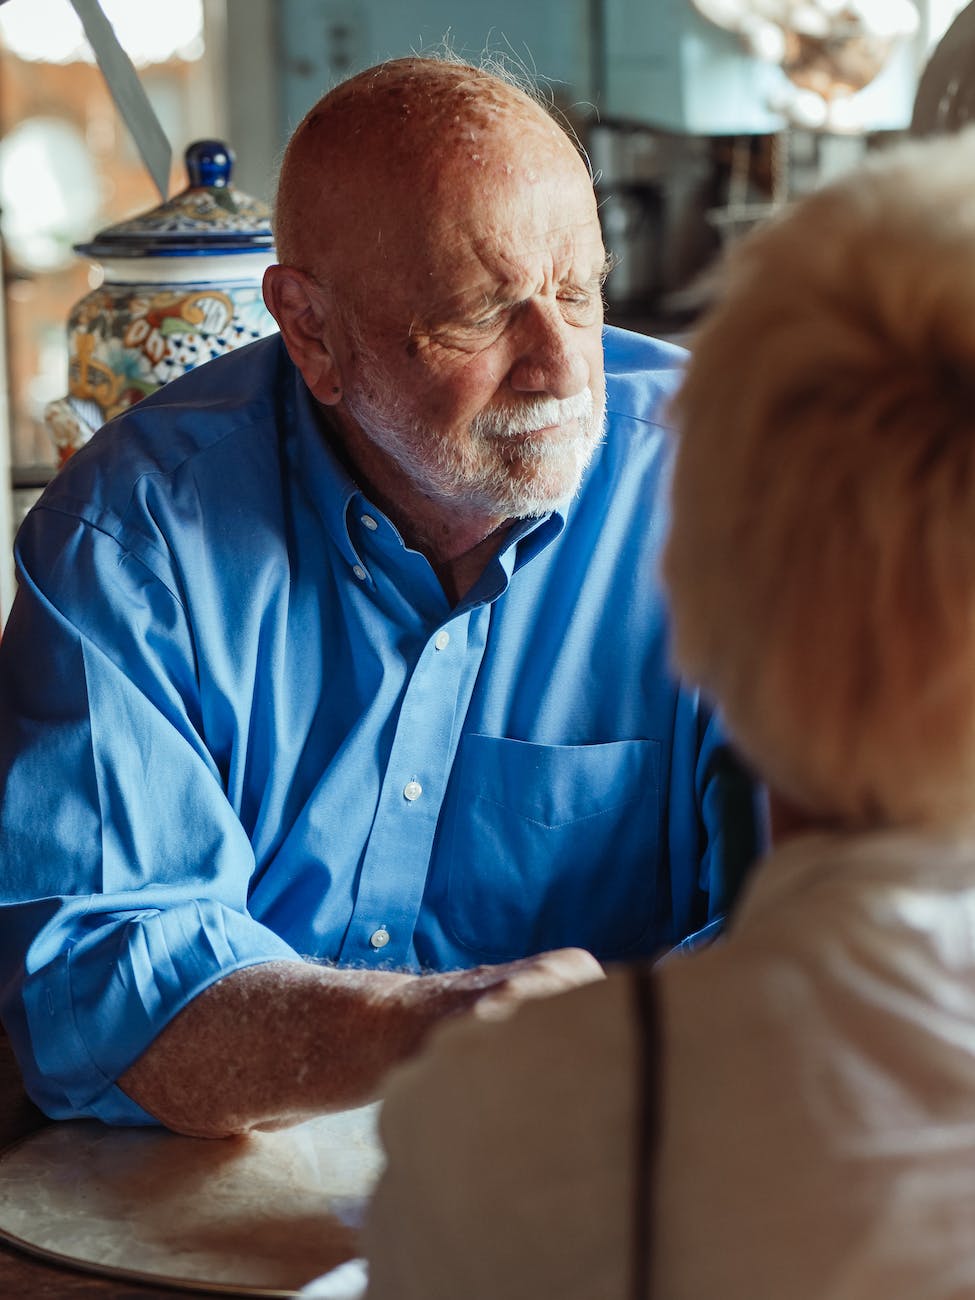 Nurturing Minds: A Compassionate Approach to Dementia Care